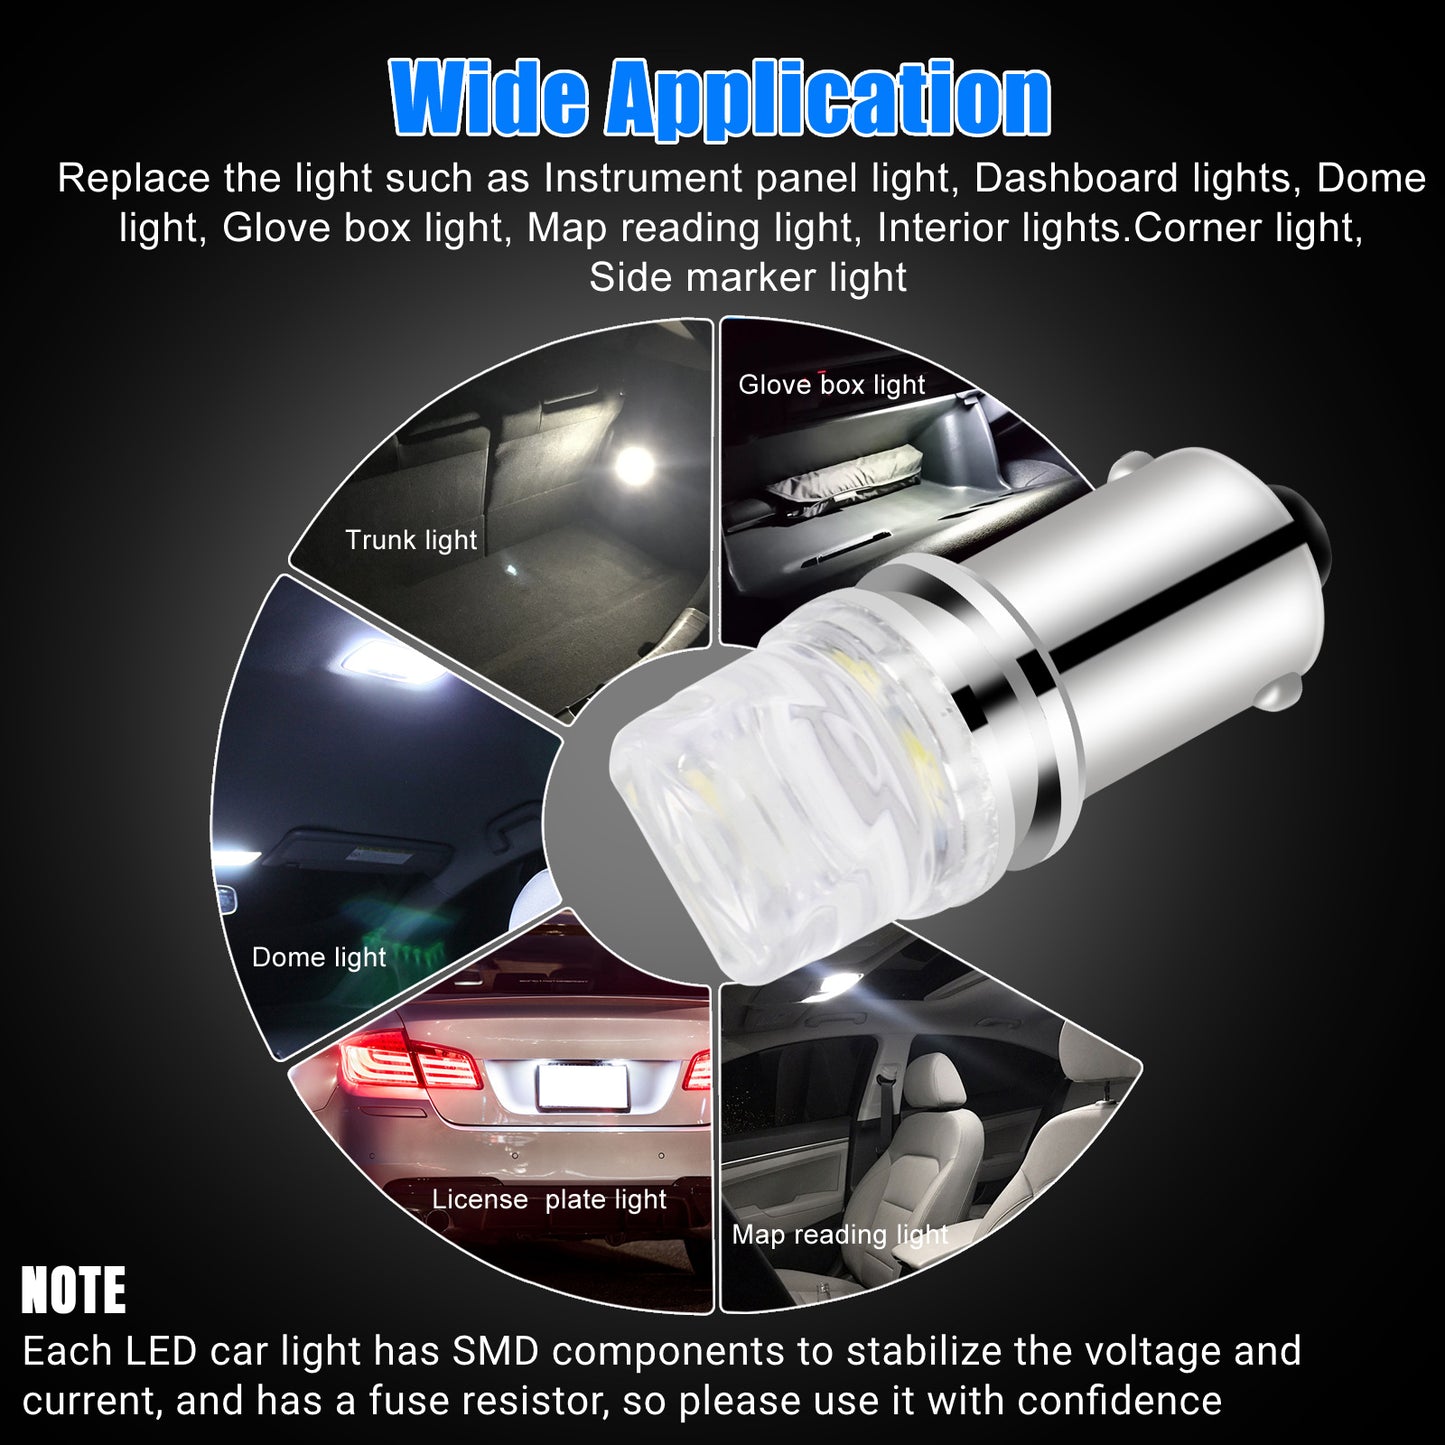 10pcs BA9S LED Car Instrument Panel Interior Light Bulbs - Bright White, Long Lifetime,features 3 high-power 2835 chips